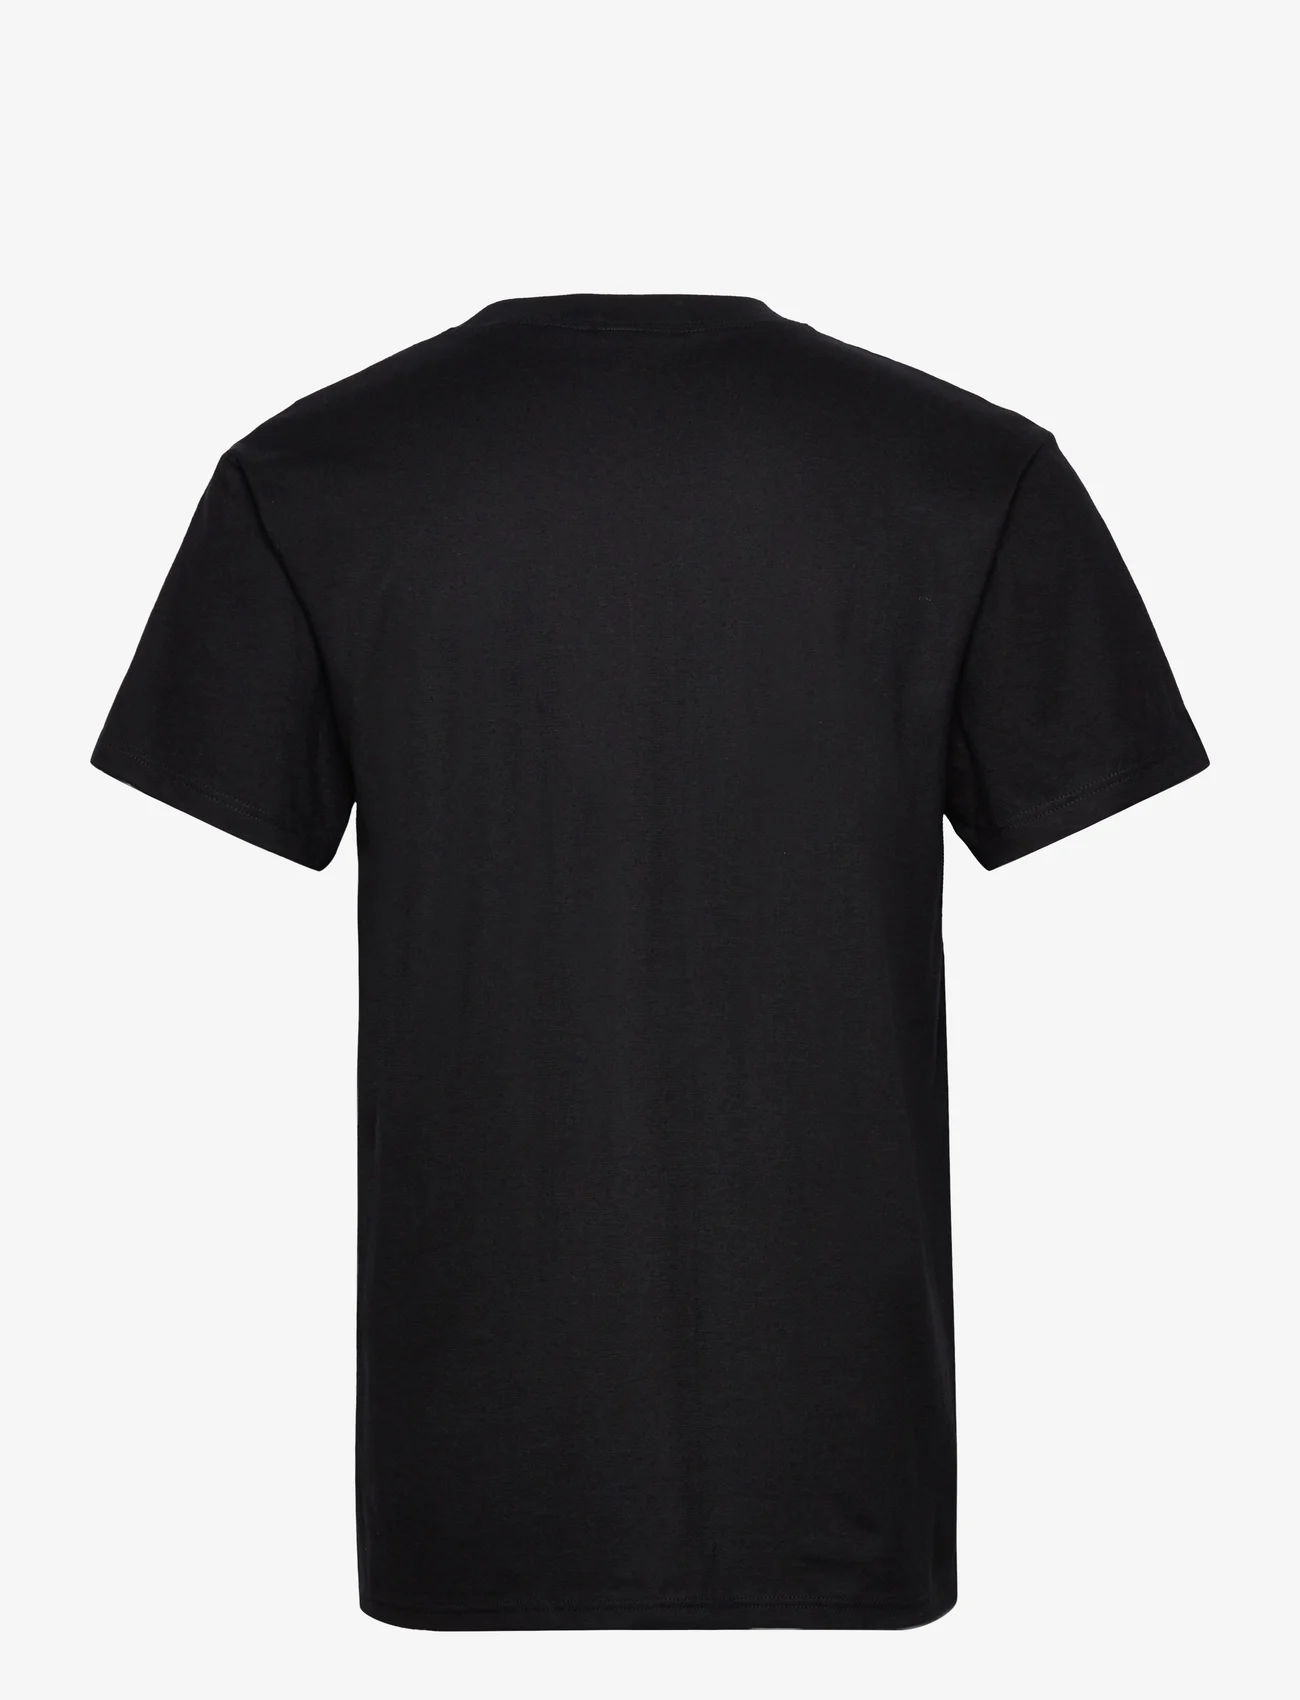 Dovre - Dovre T-shirts 1/4 ærme organi - lowest prices - black - 1